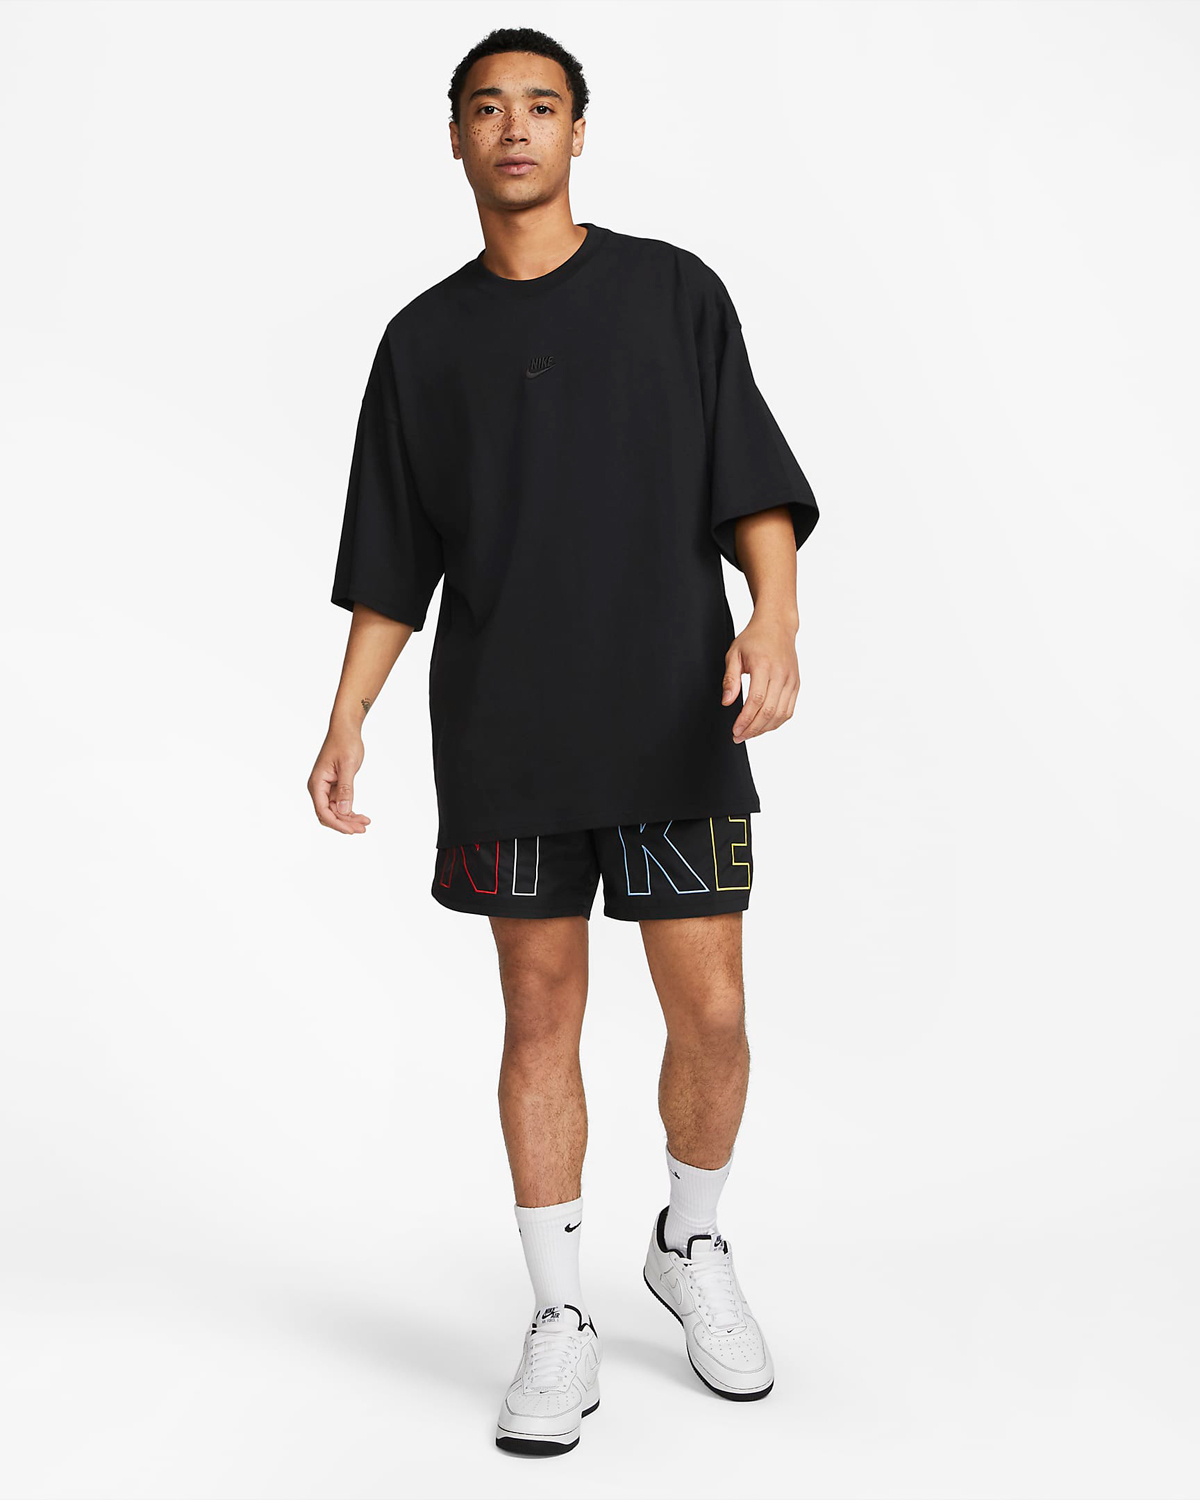 Nike-Sportswear-Premium-Essentials-Oversized-T-Shirt-Black-Outfit